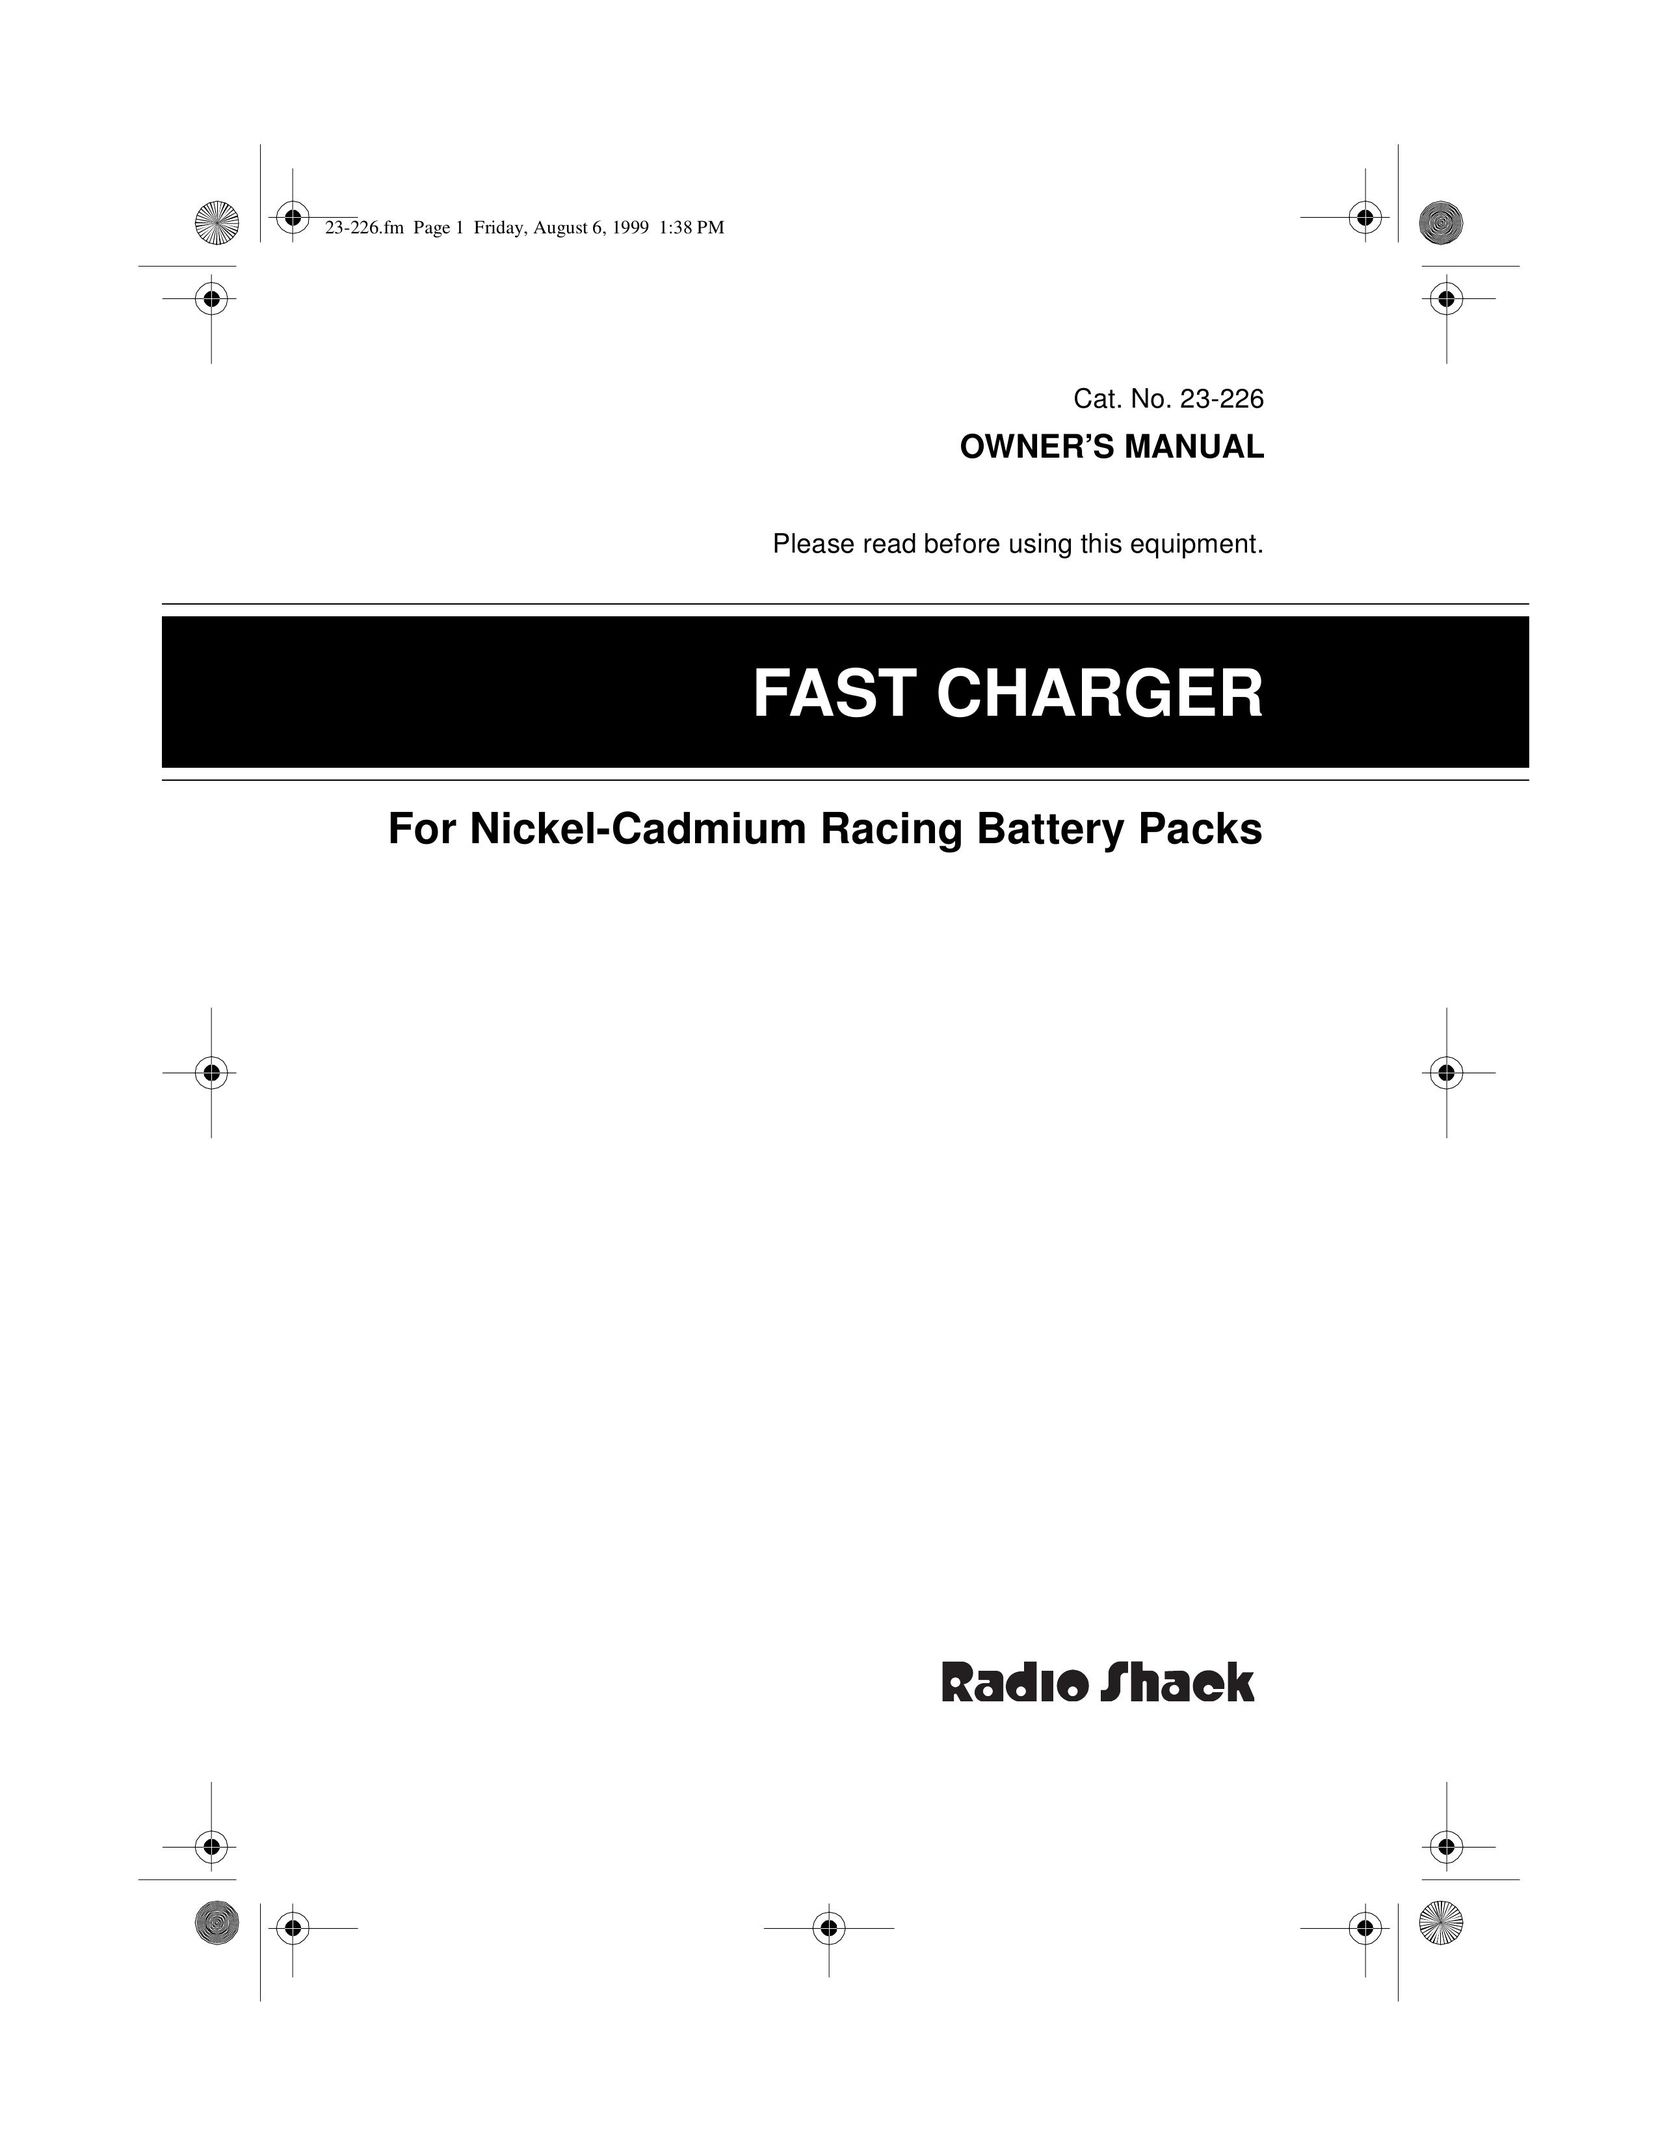 Radio Shack 23-226 Battery Charger User Manual